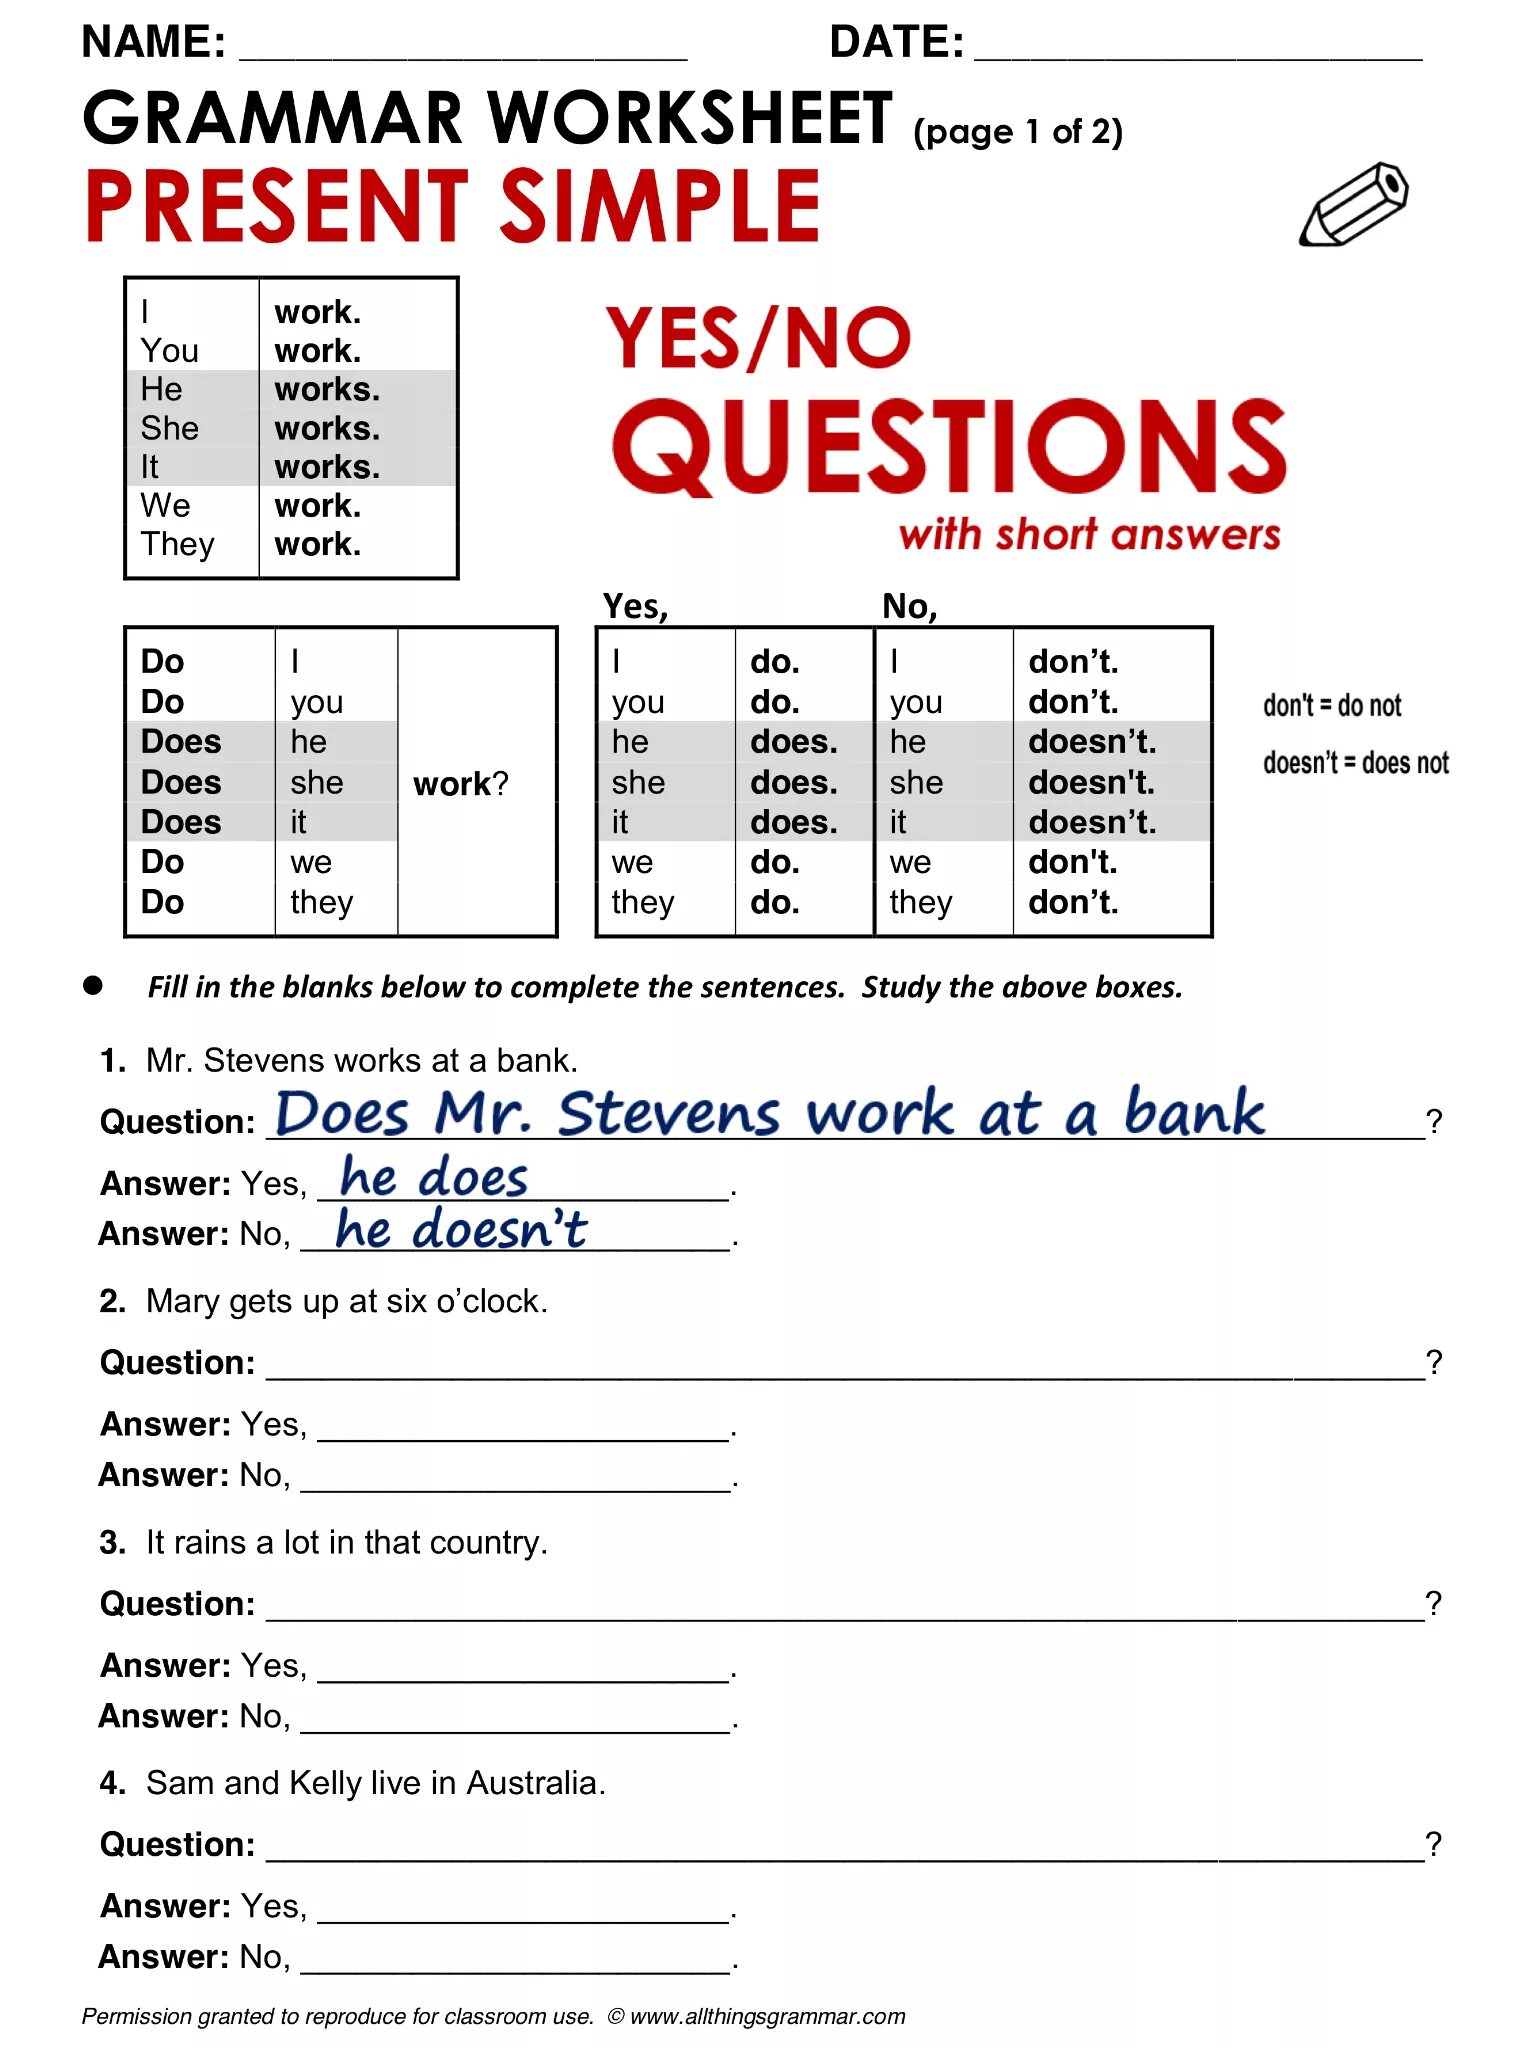 Questions test english. Present simple вопросы Worksheets. Специальные вопросы в present simple Worksheets. Present simple вопросы Worksheets for Kids. Вопросы Worksheets.